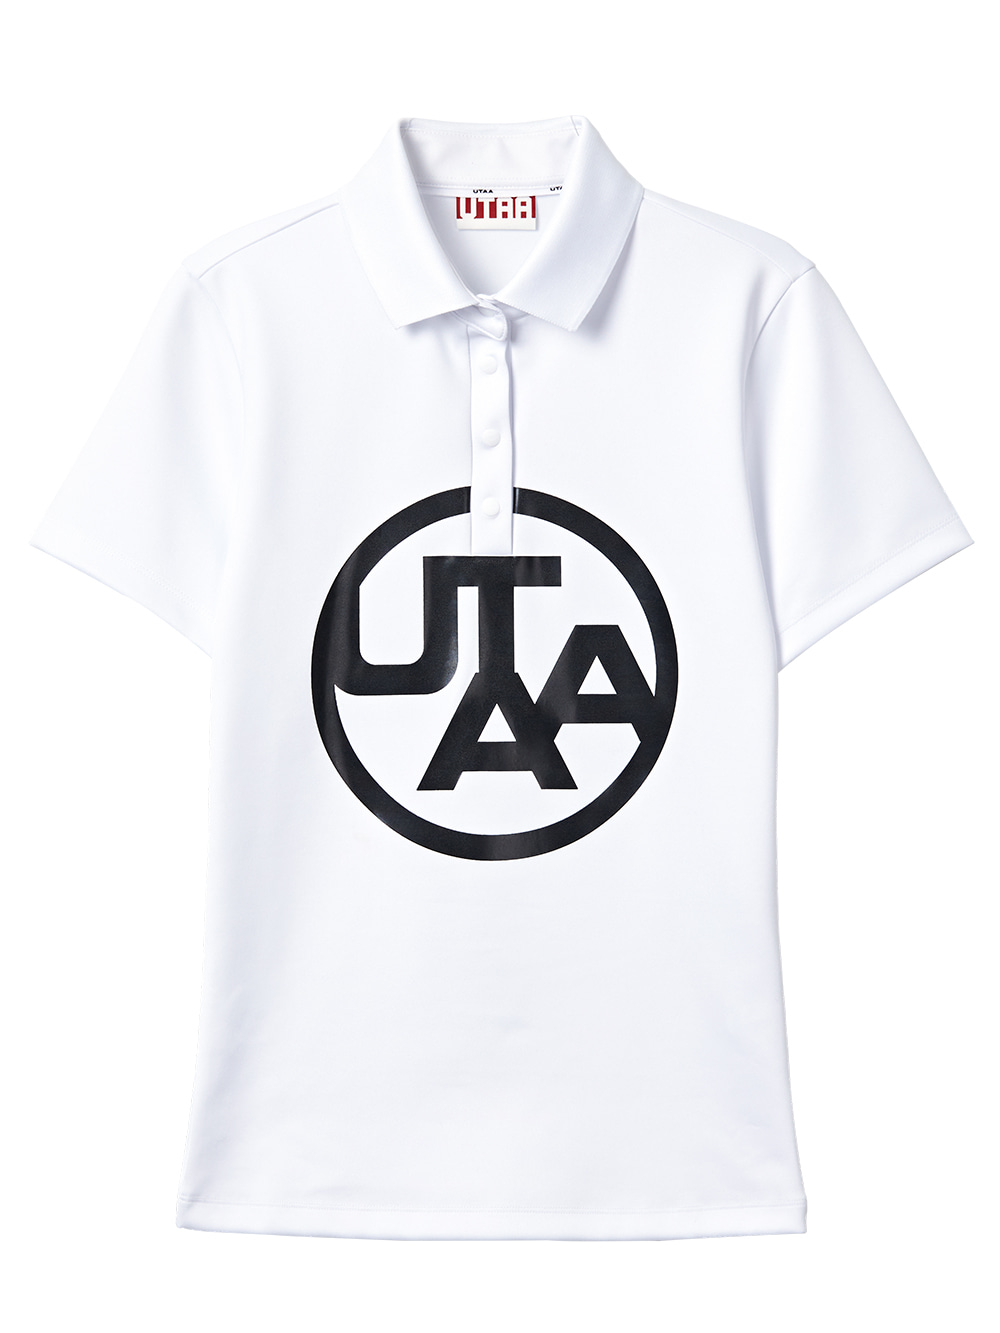 UTAA Emblem PK T-shirts : Womens  (UA0TSF453WH)